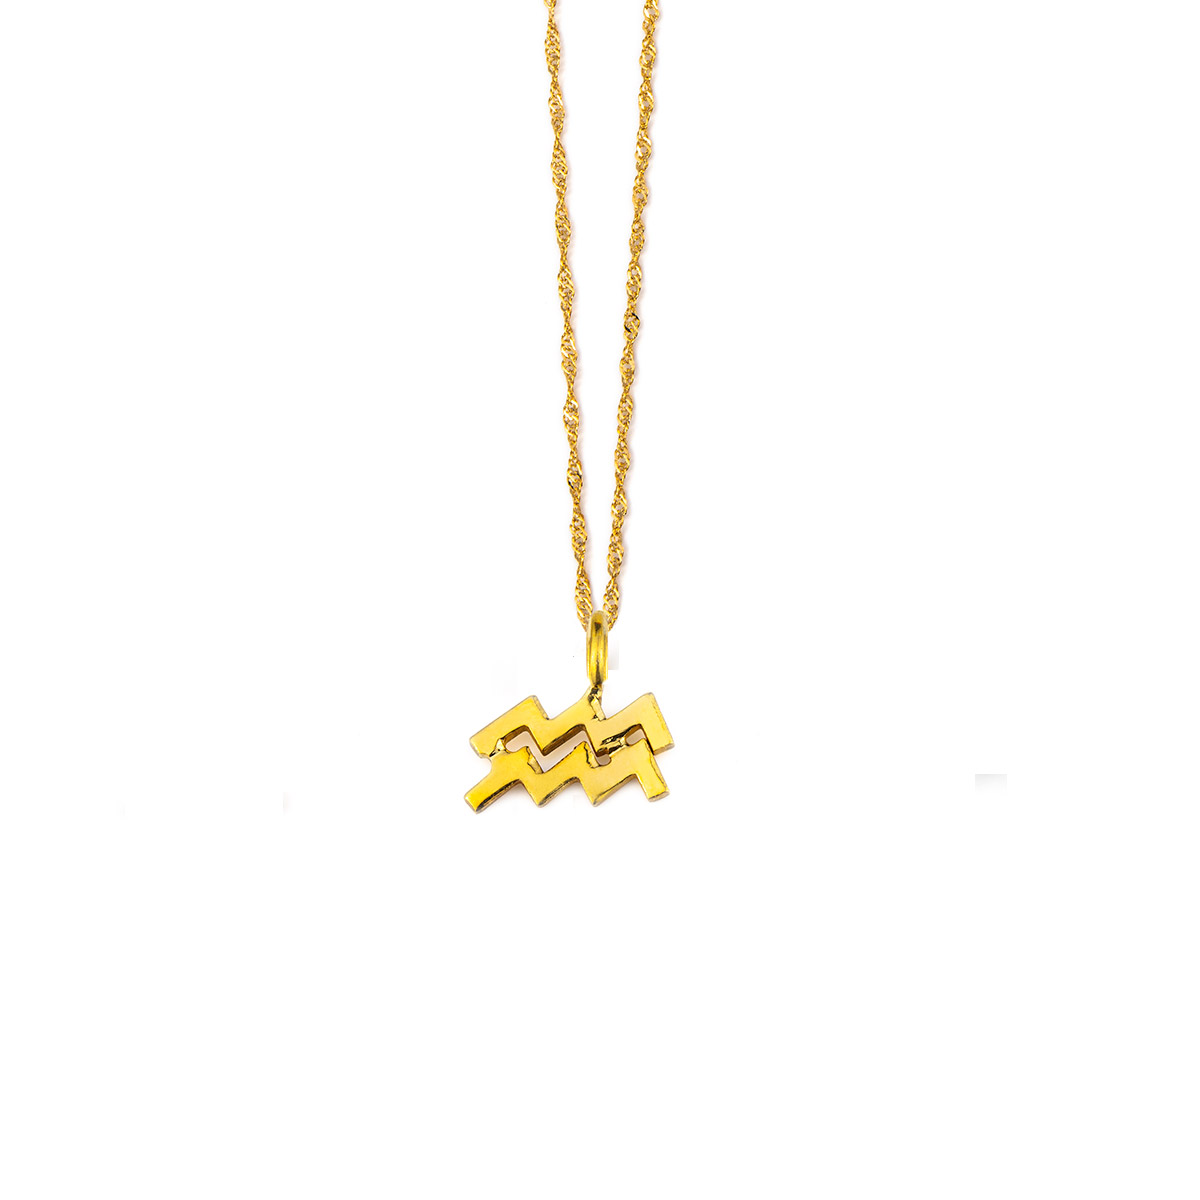 Aquarious Zodiac Sign Necklace - 14k Gold